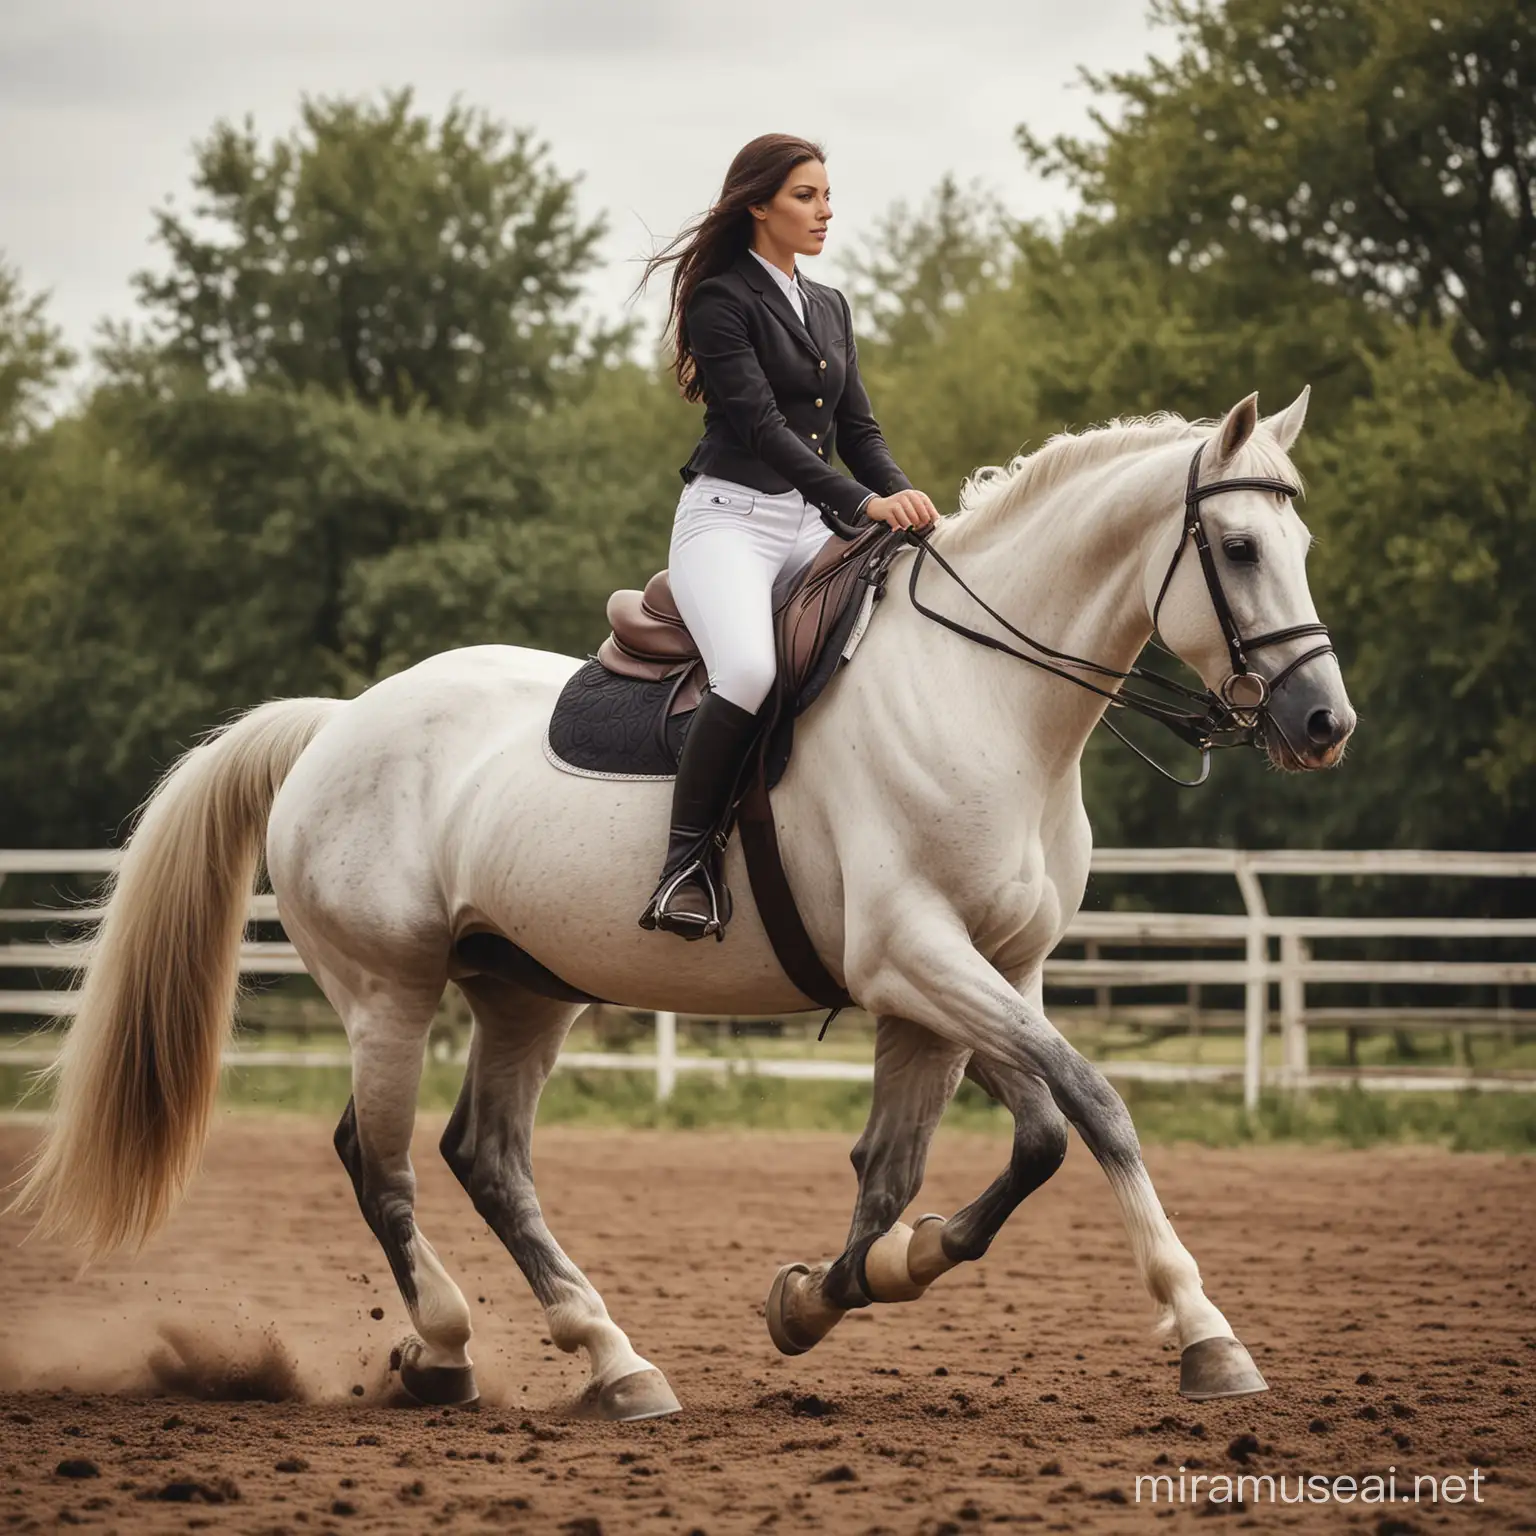 beautiful brunette horse rider riding an elegant horse